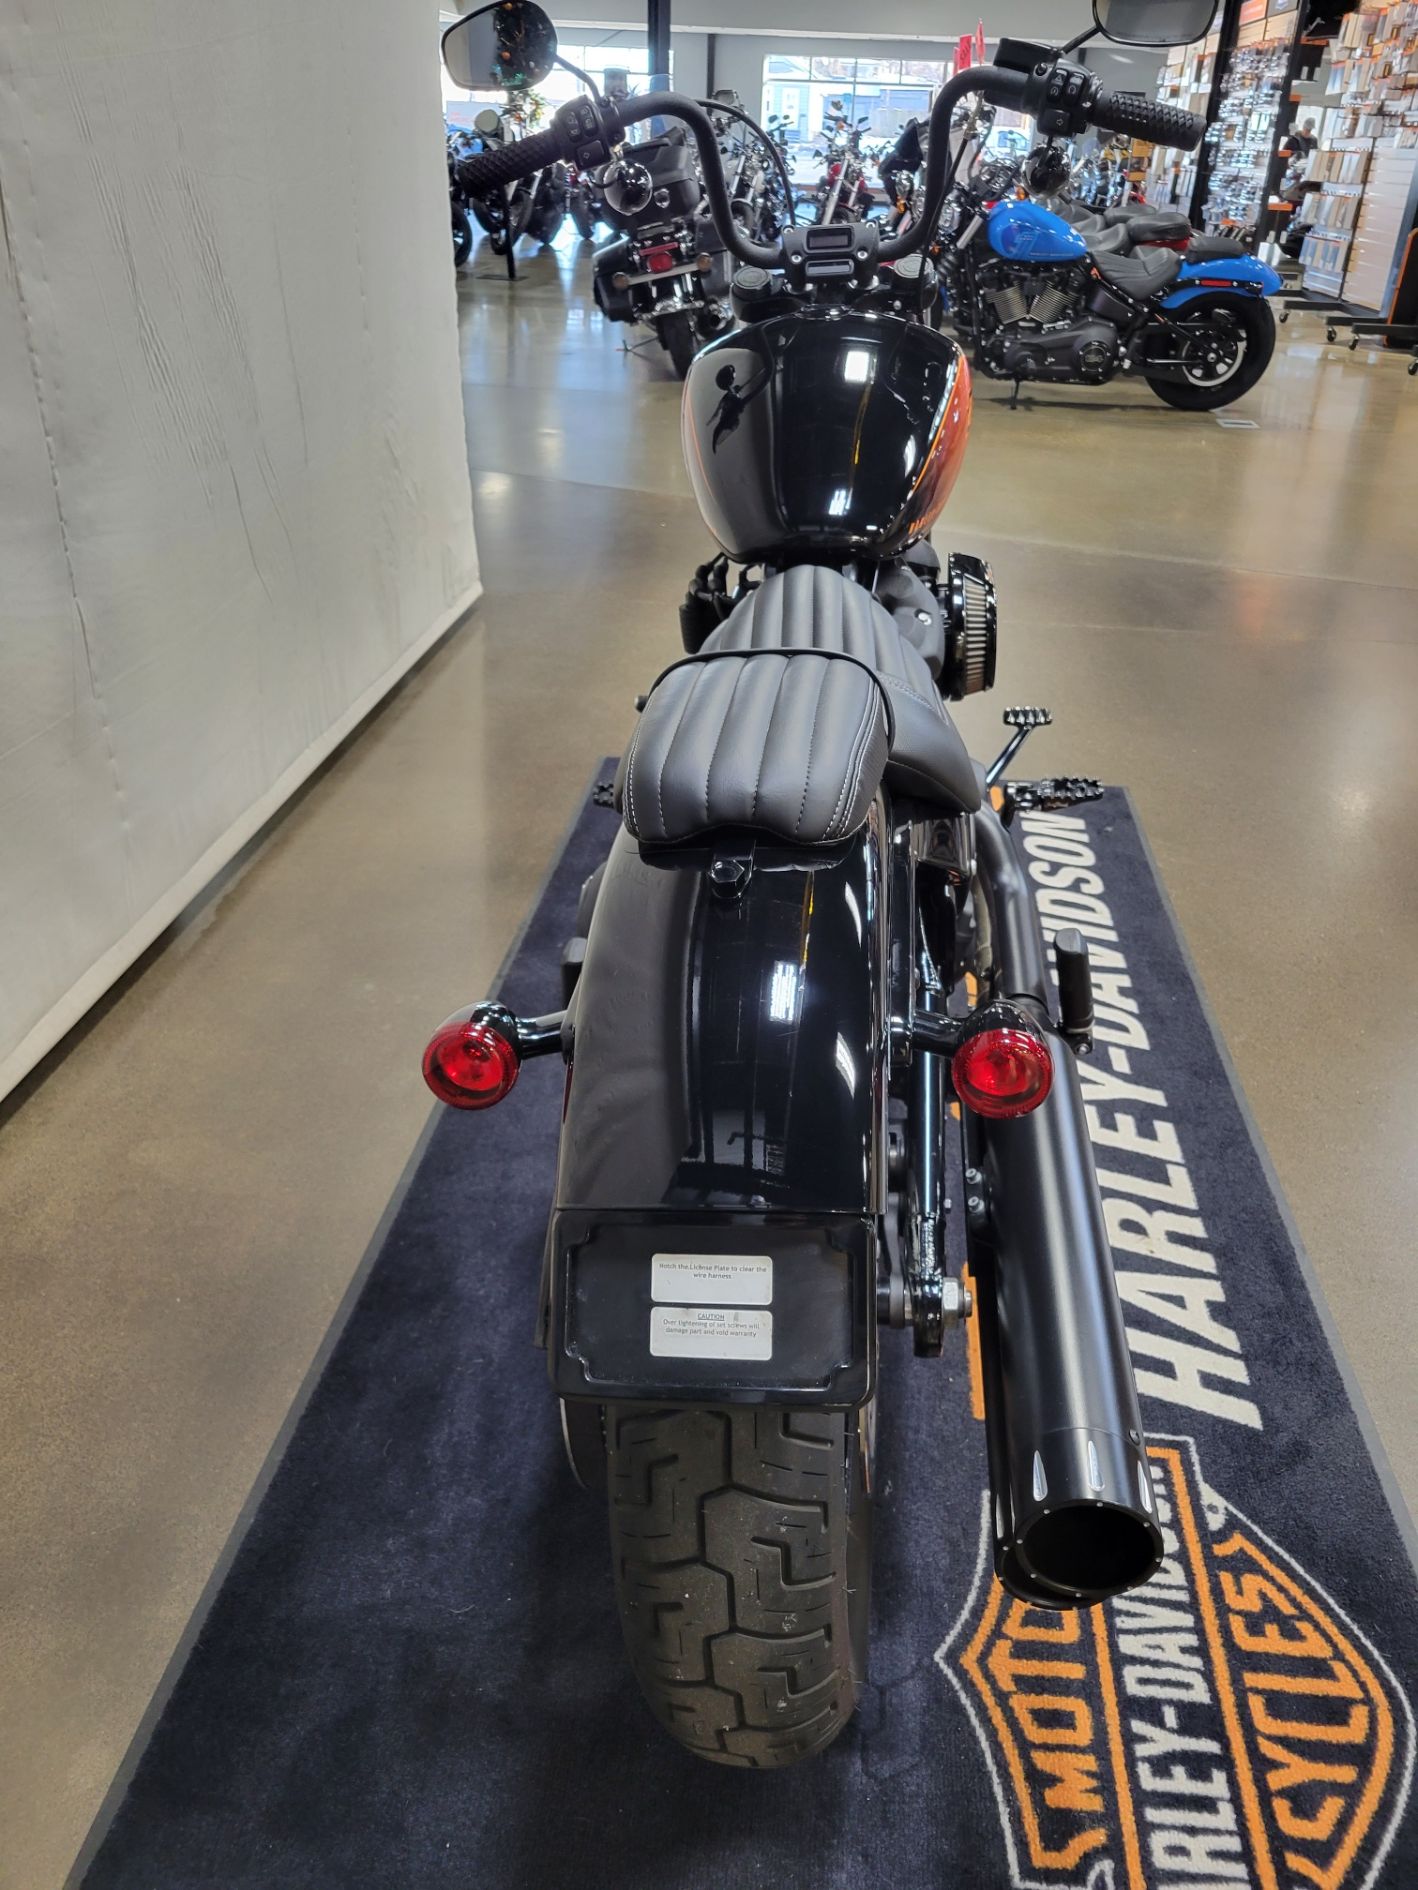 2021 Harley-Davidson Street Bob® 114 in Syracuse, New York - Photo 4